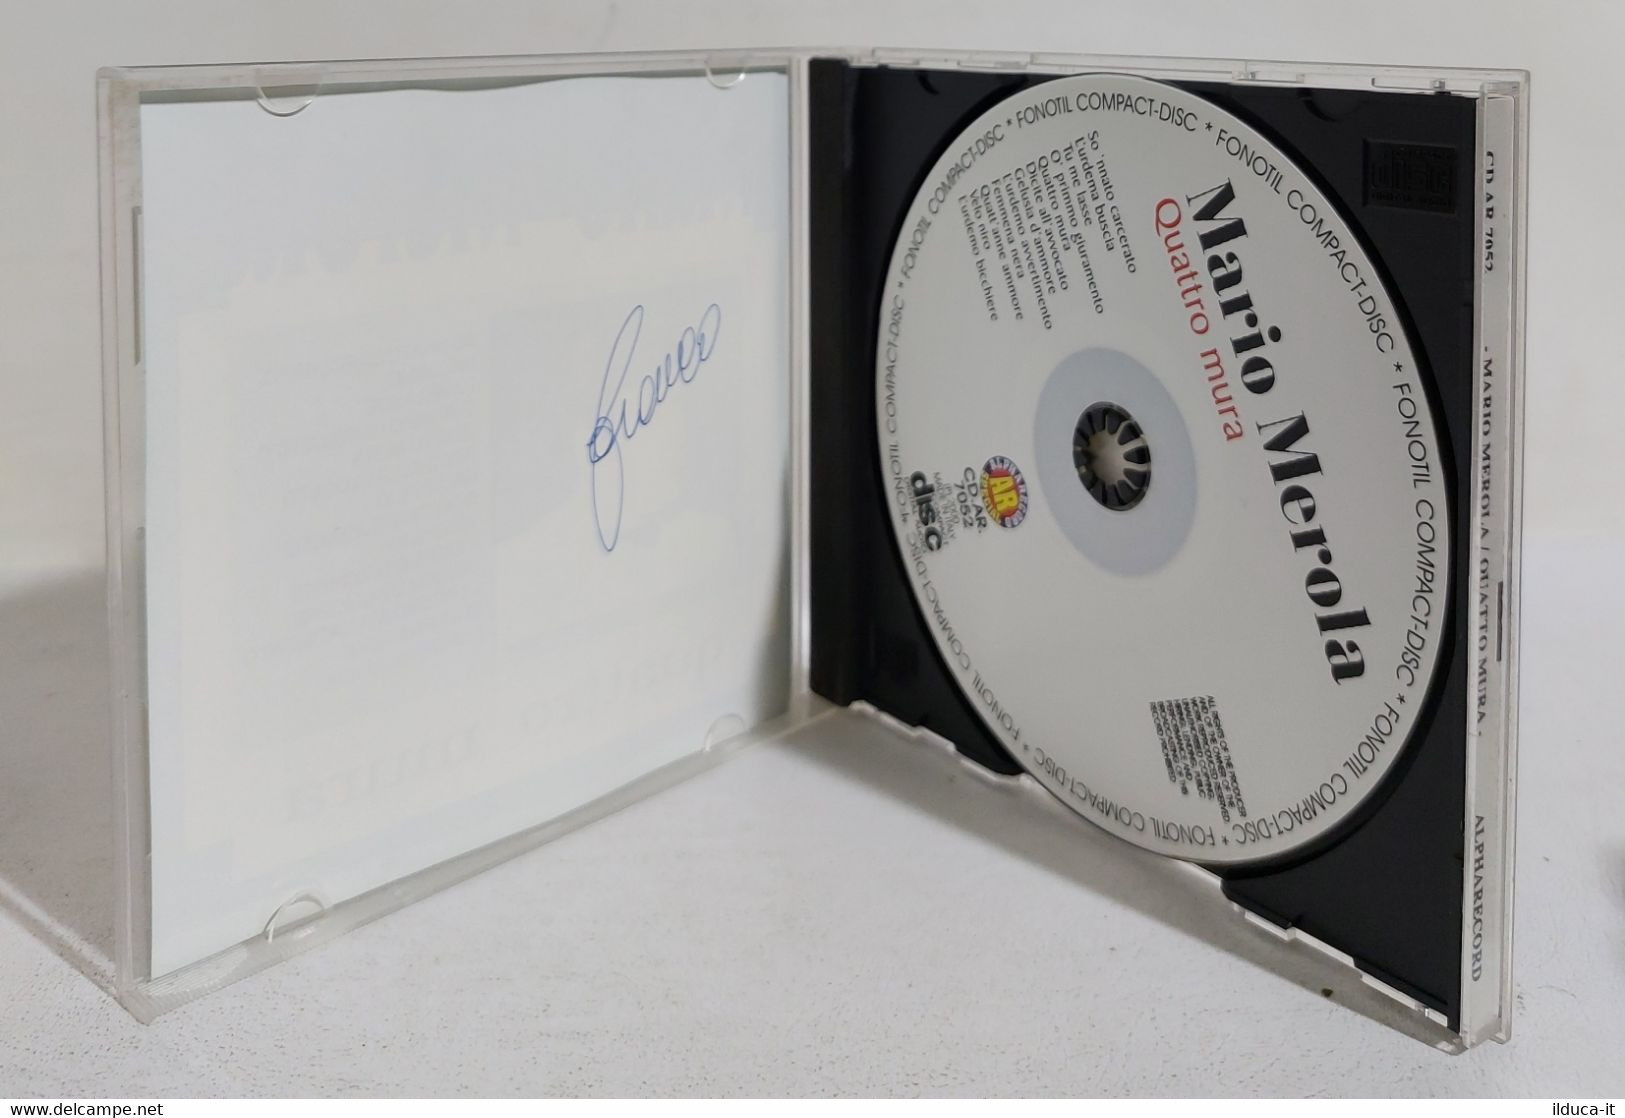 I107925 CD - MARIO MEROLA - Quattro Mura - Alpha Record 1993 - Andere - Italiaans